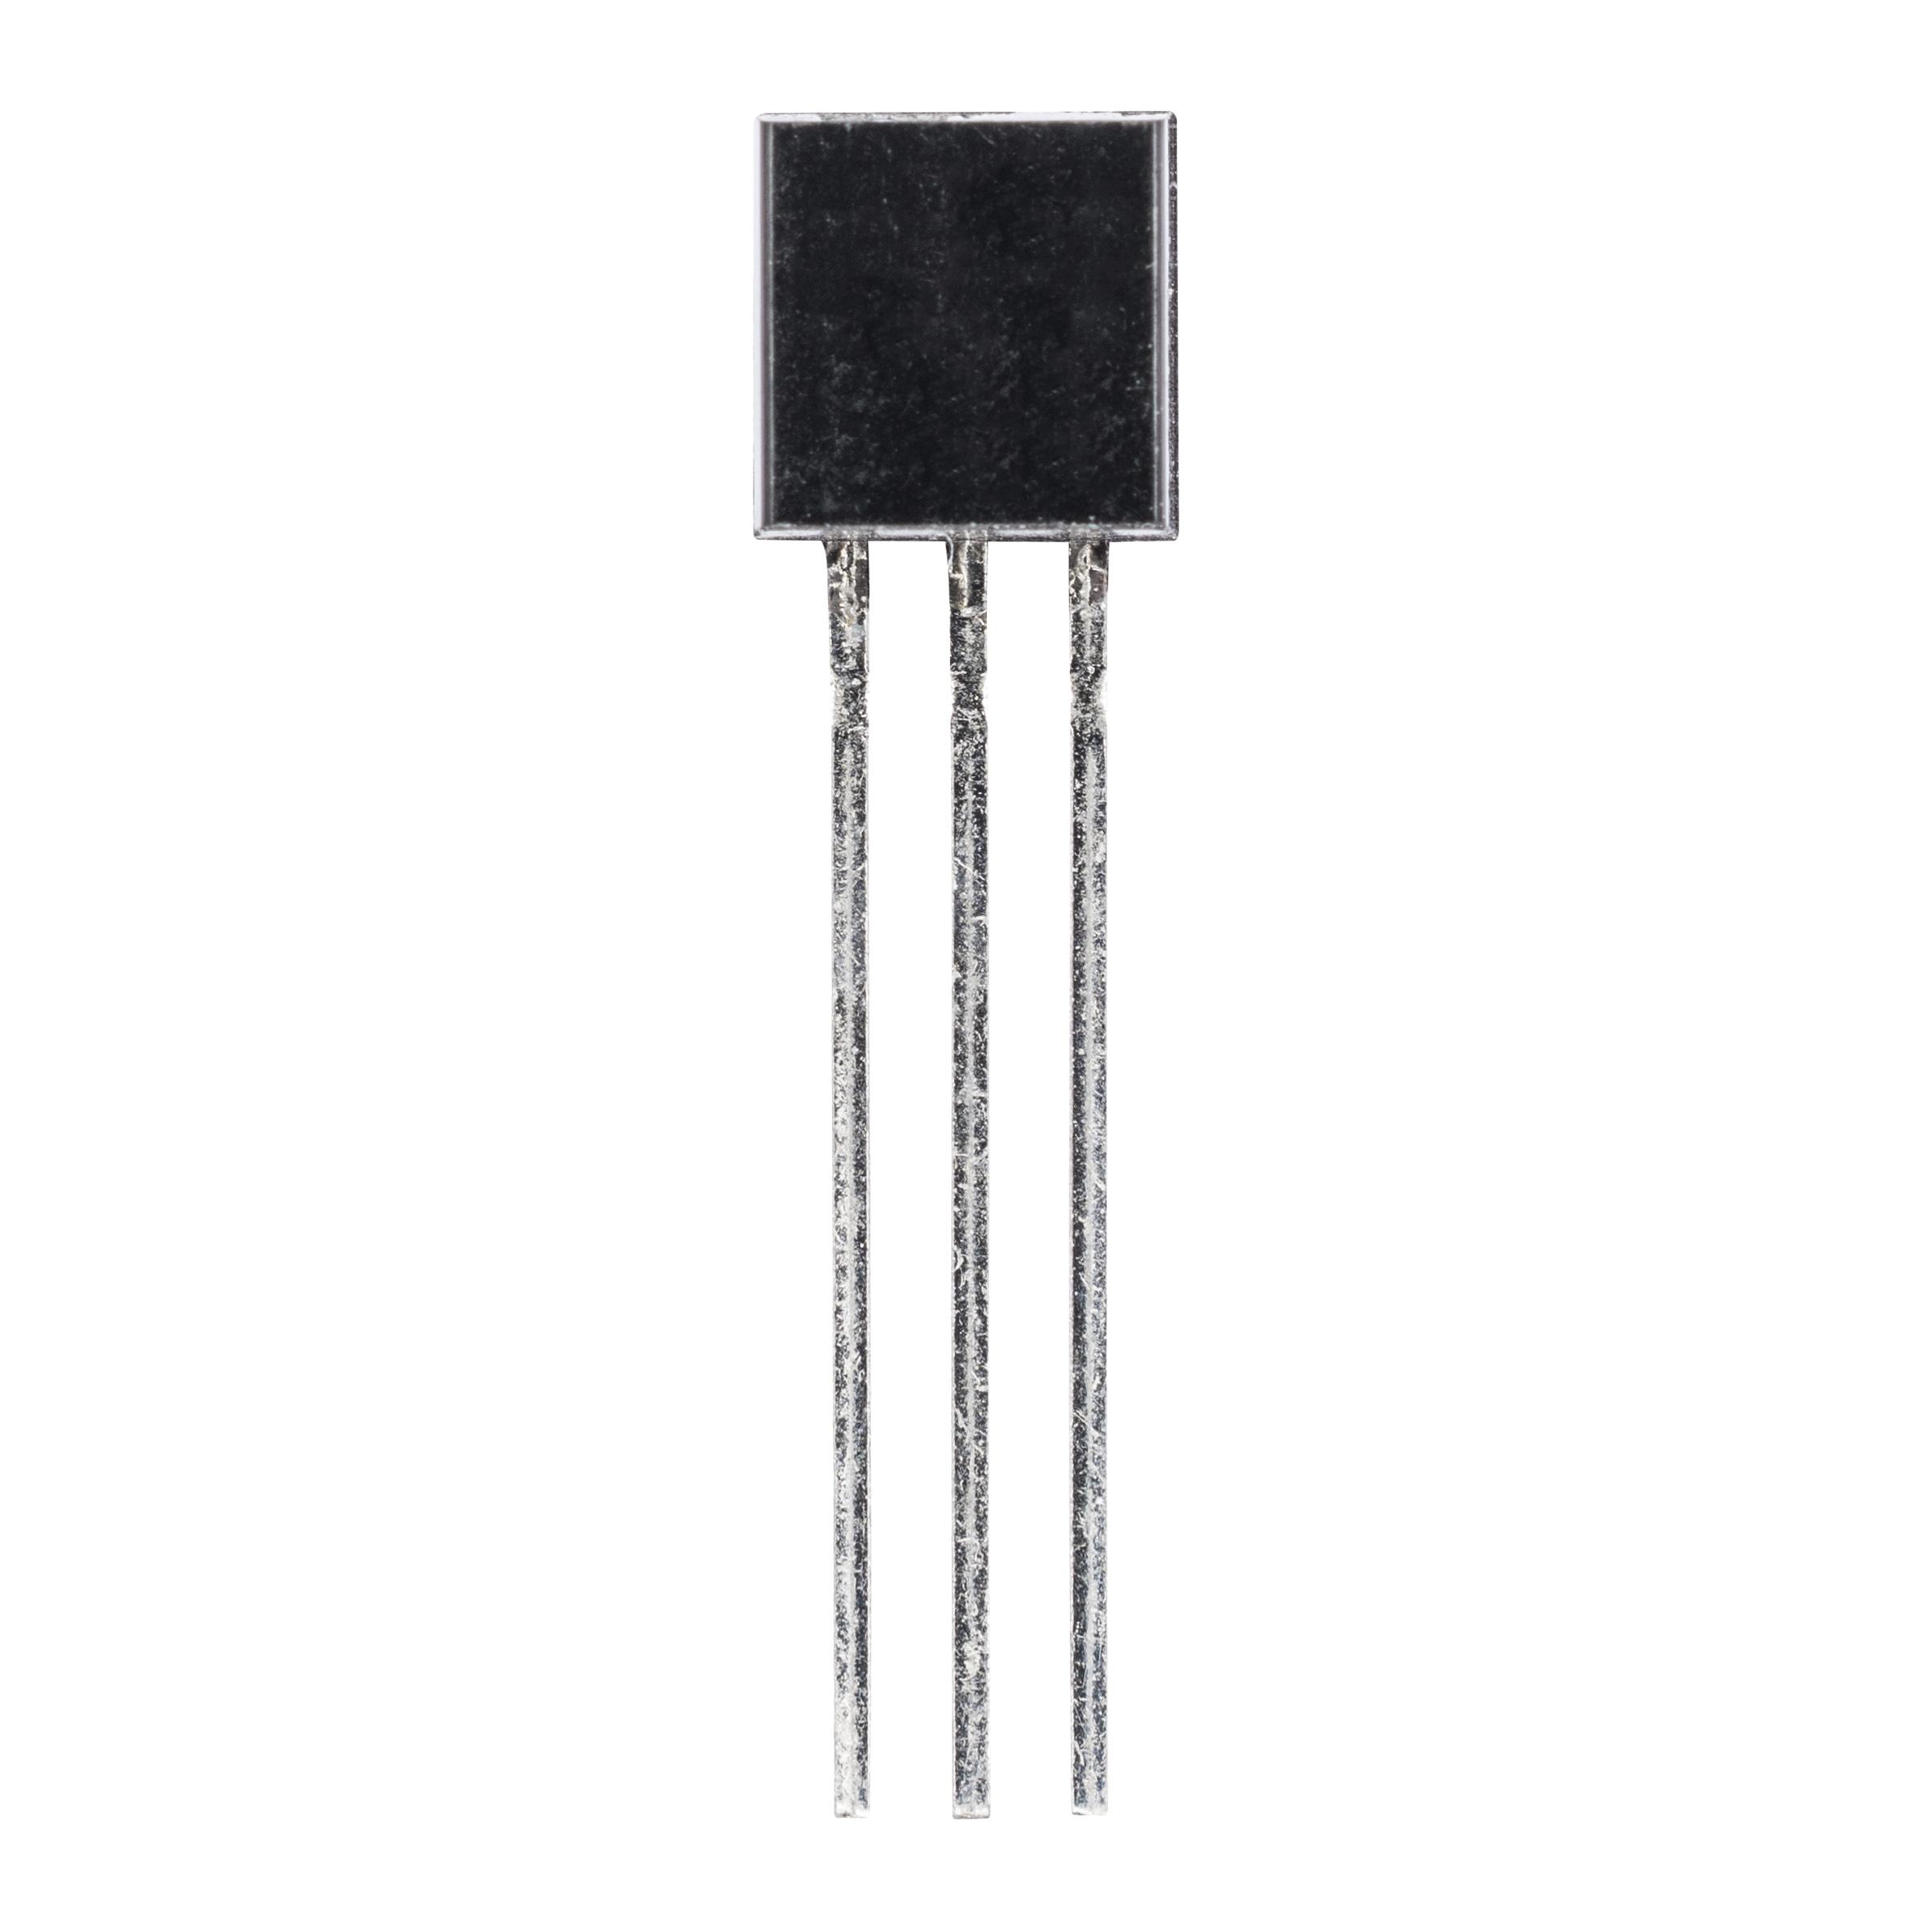 2N2222A (TO-92) (транзистор биполярный NPN)